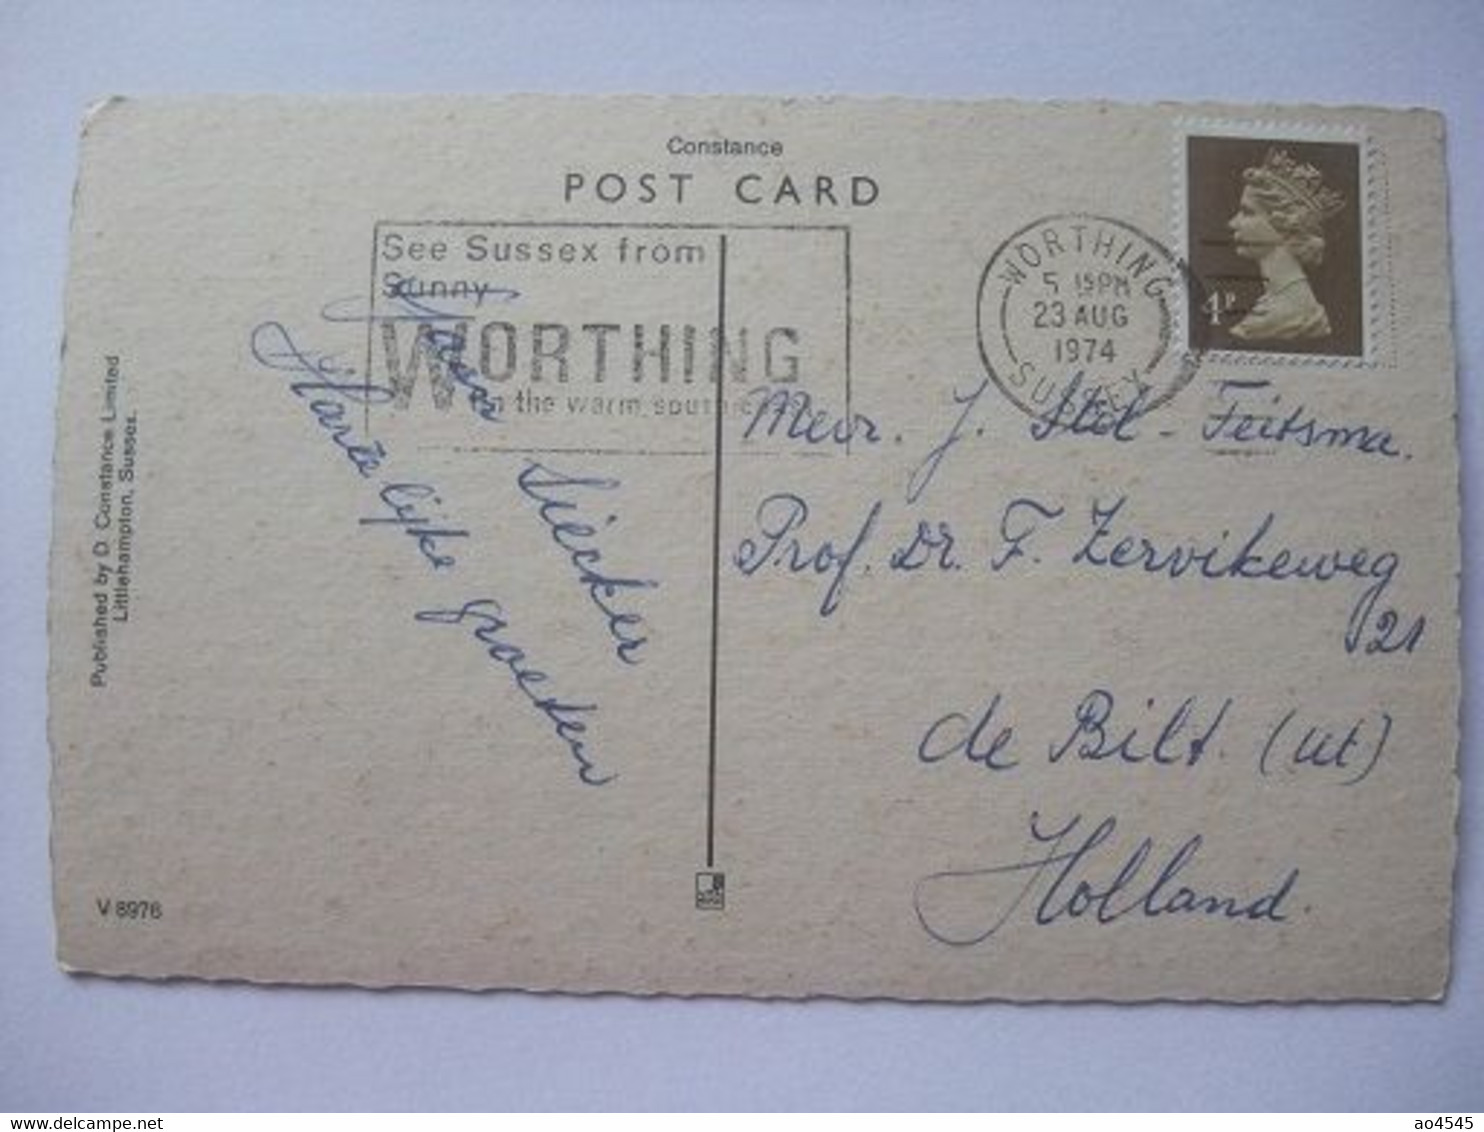 R98 Postcard Greetings From Worthing -1974 - Worthing